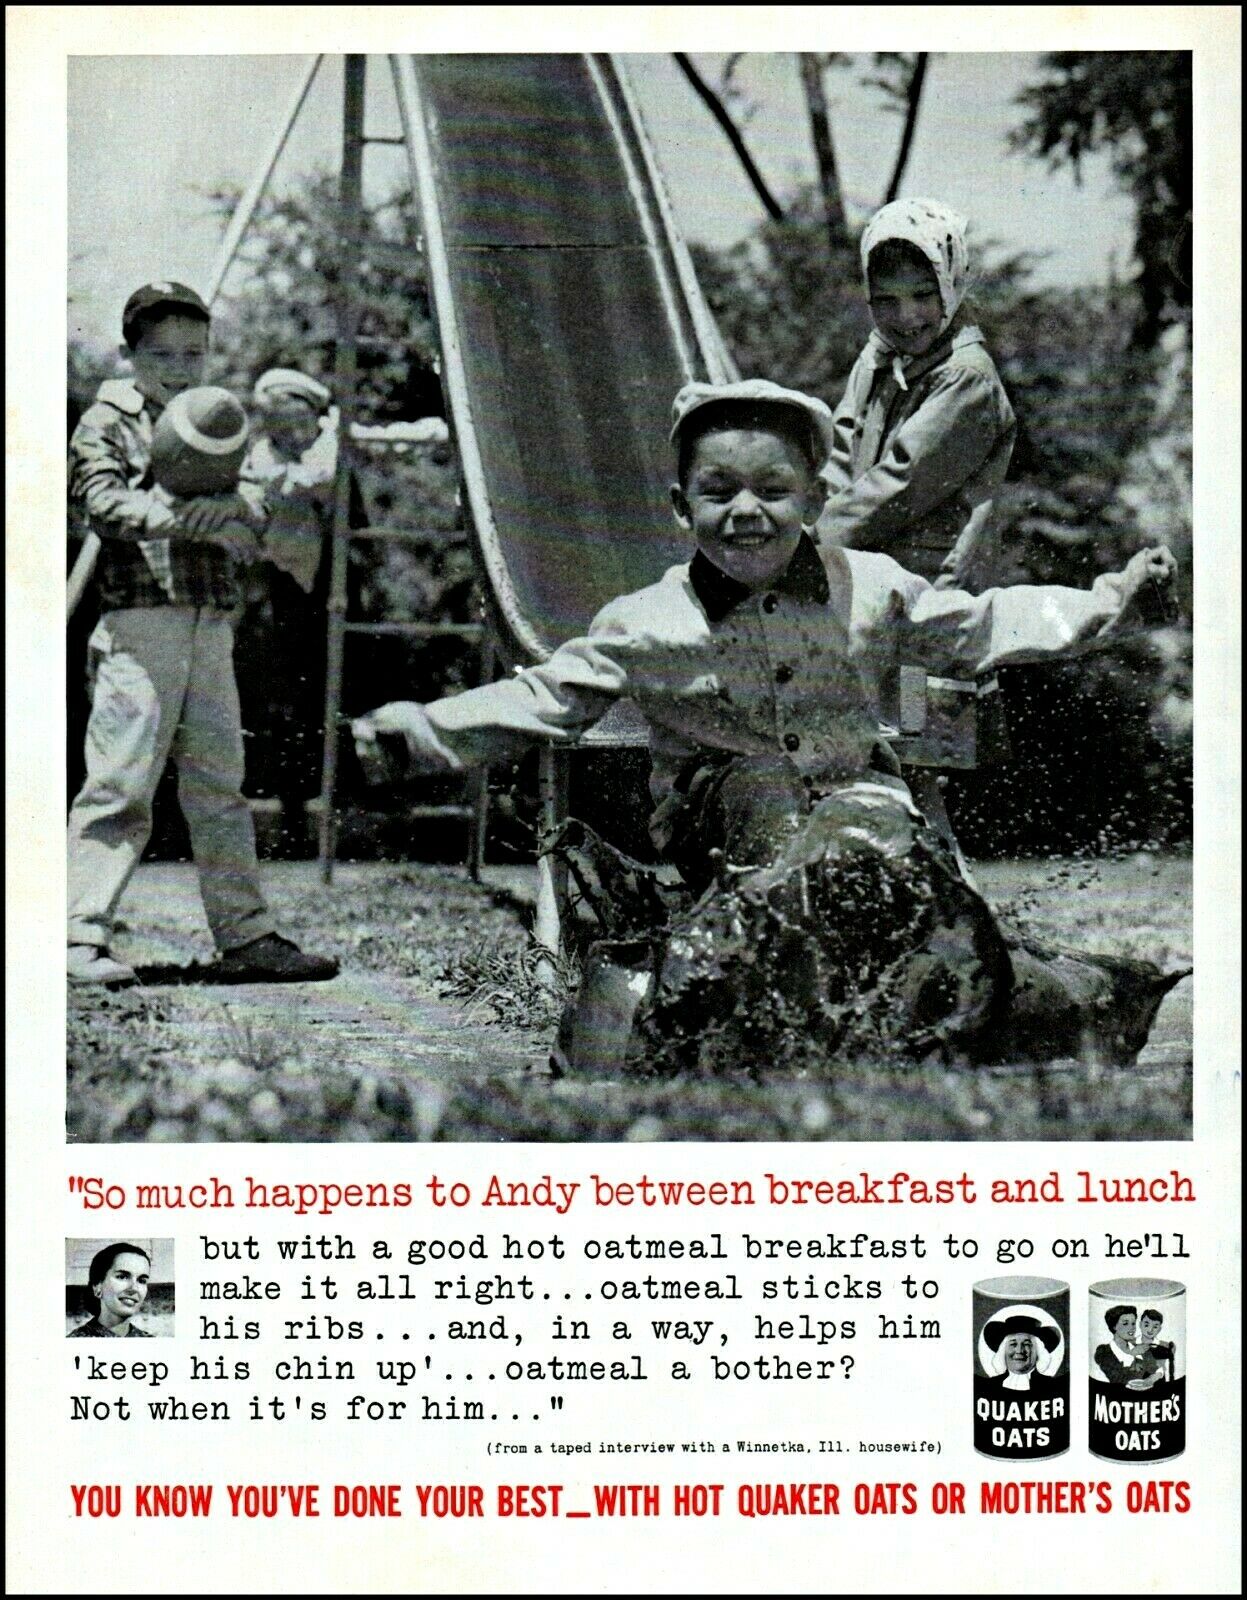 1960 Kids Playground Slide Quaker Oats Oatmeal Classic Photo Print Ad Adl74